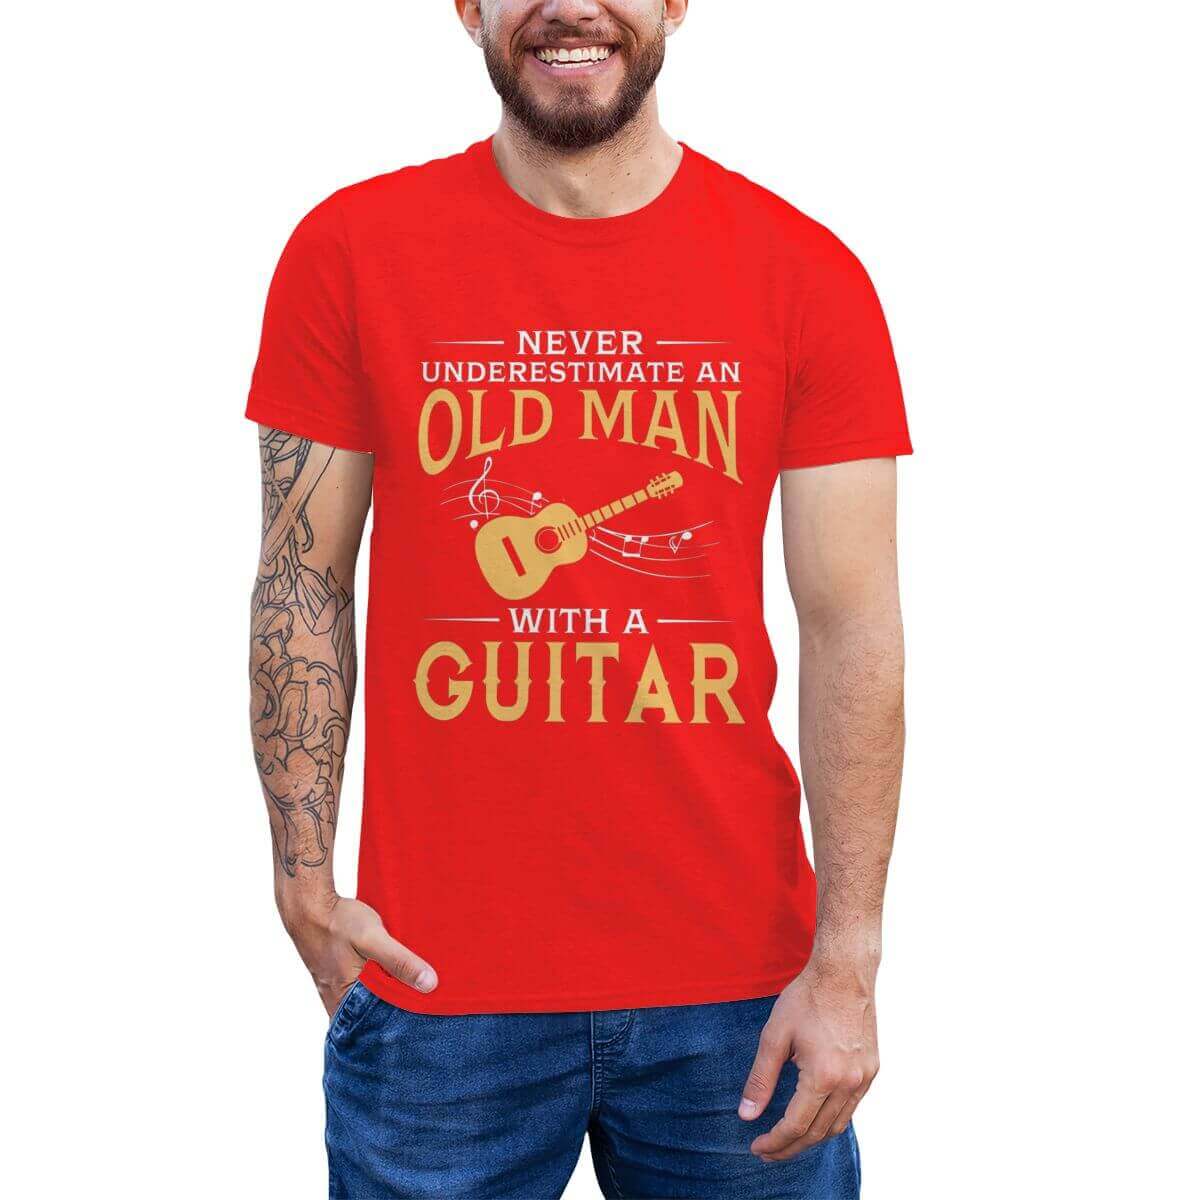 An Old Man With A Guitar print T-Shirt Red guitarmetrics